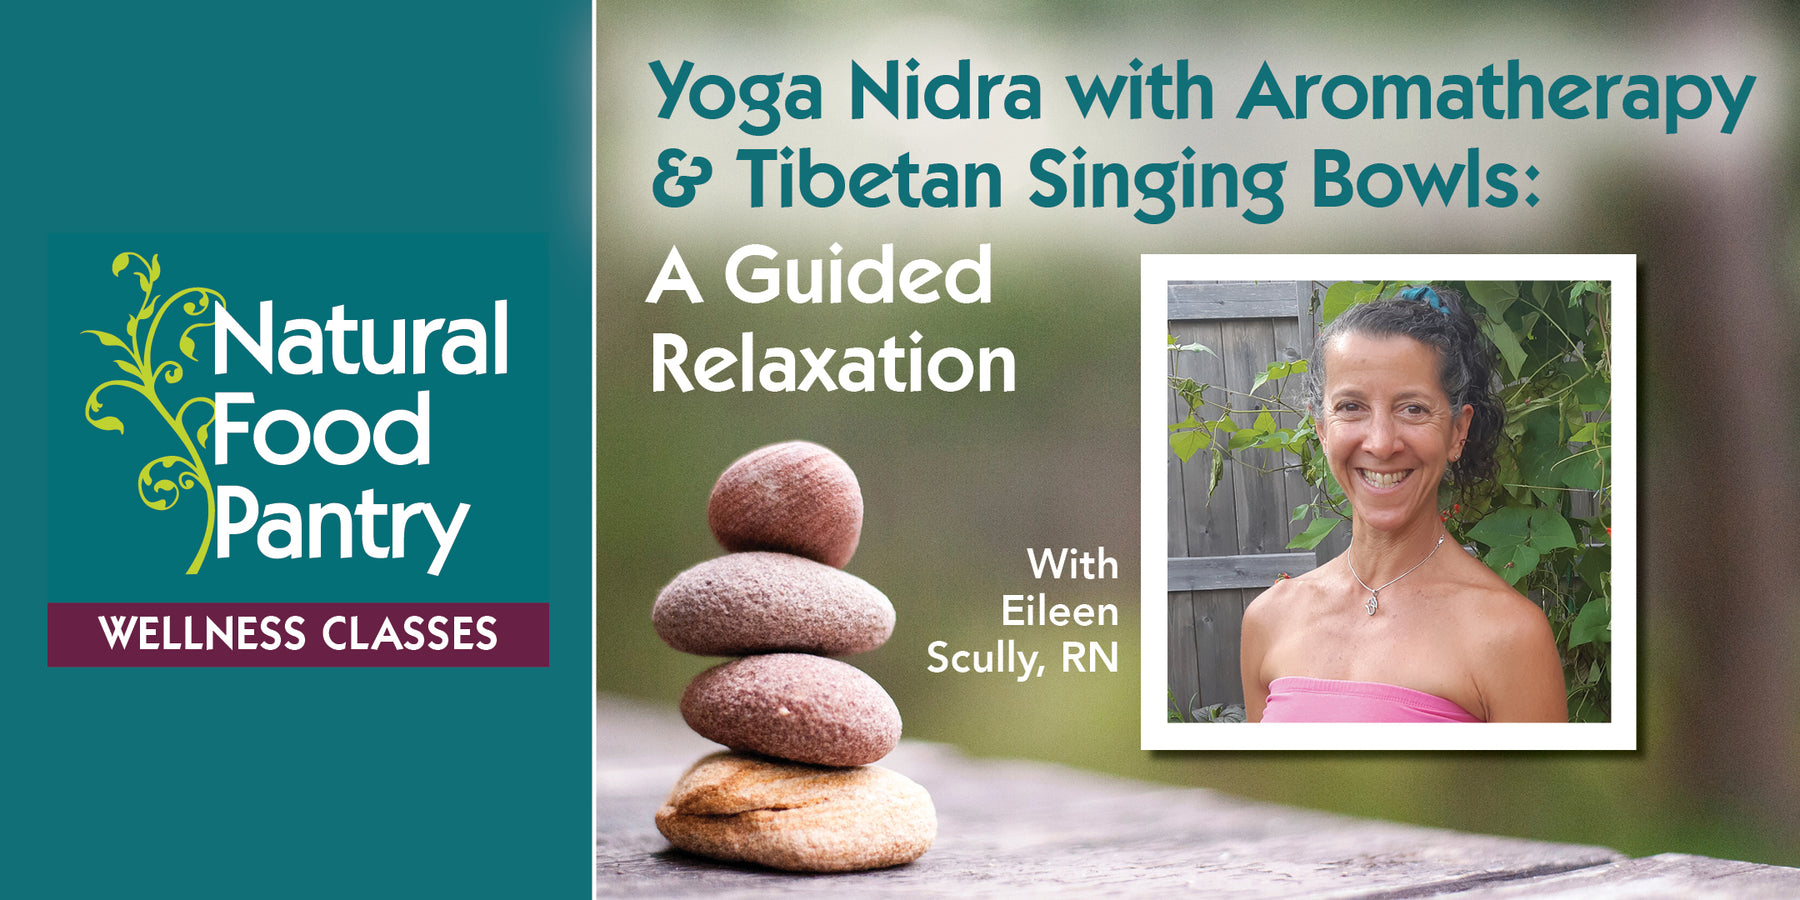 Mar 19:  Yoga Nidra with Aromatherapy & Tibetan Singing Bowls